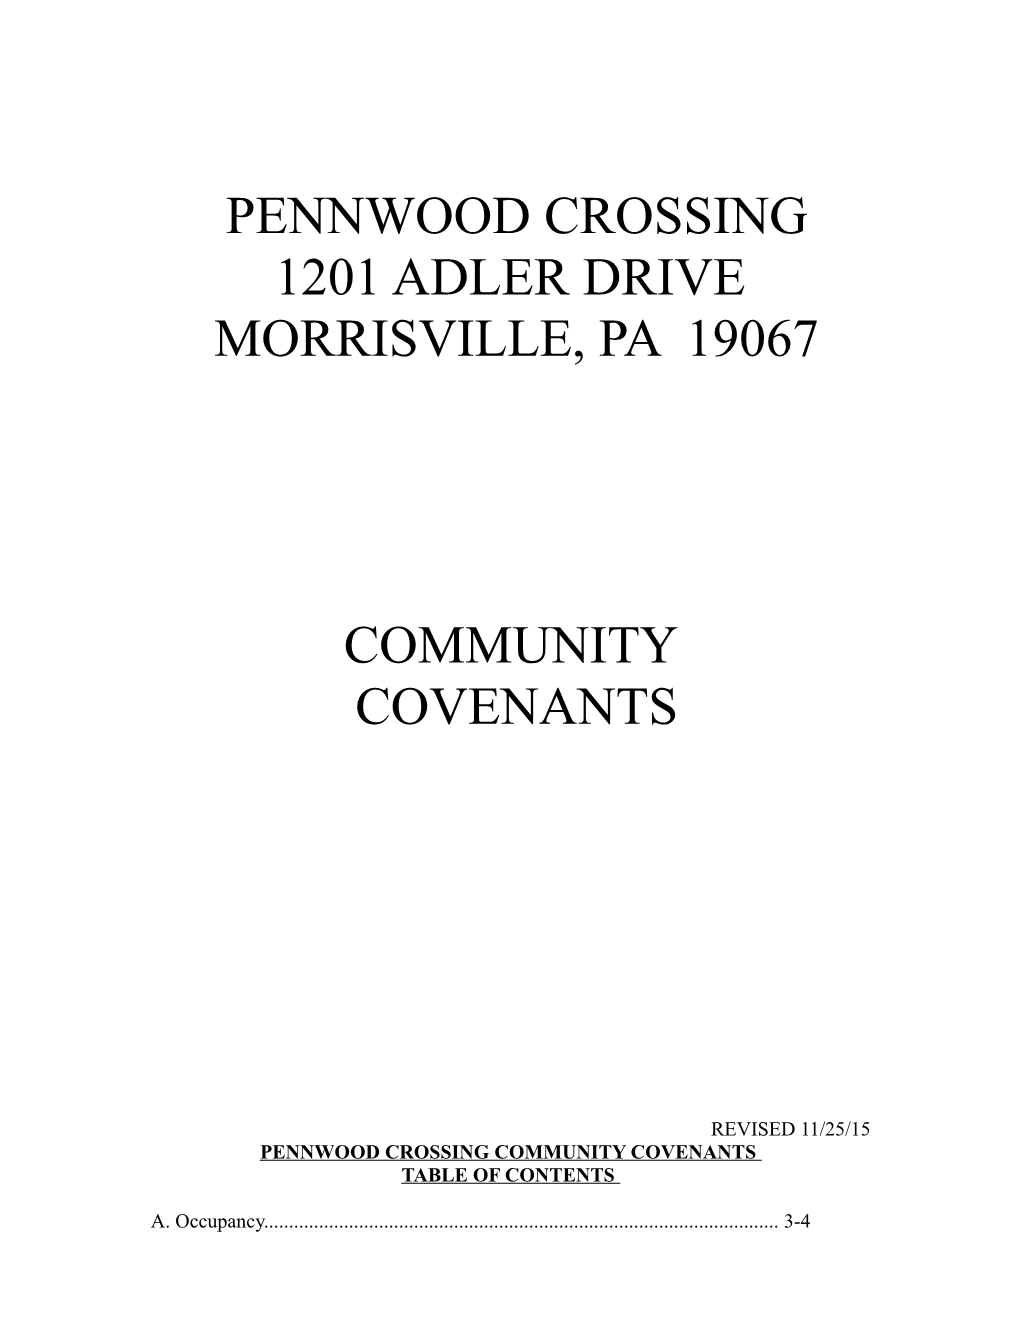 Pennwood Crossing Community Covenants